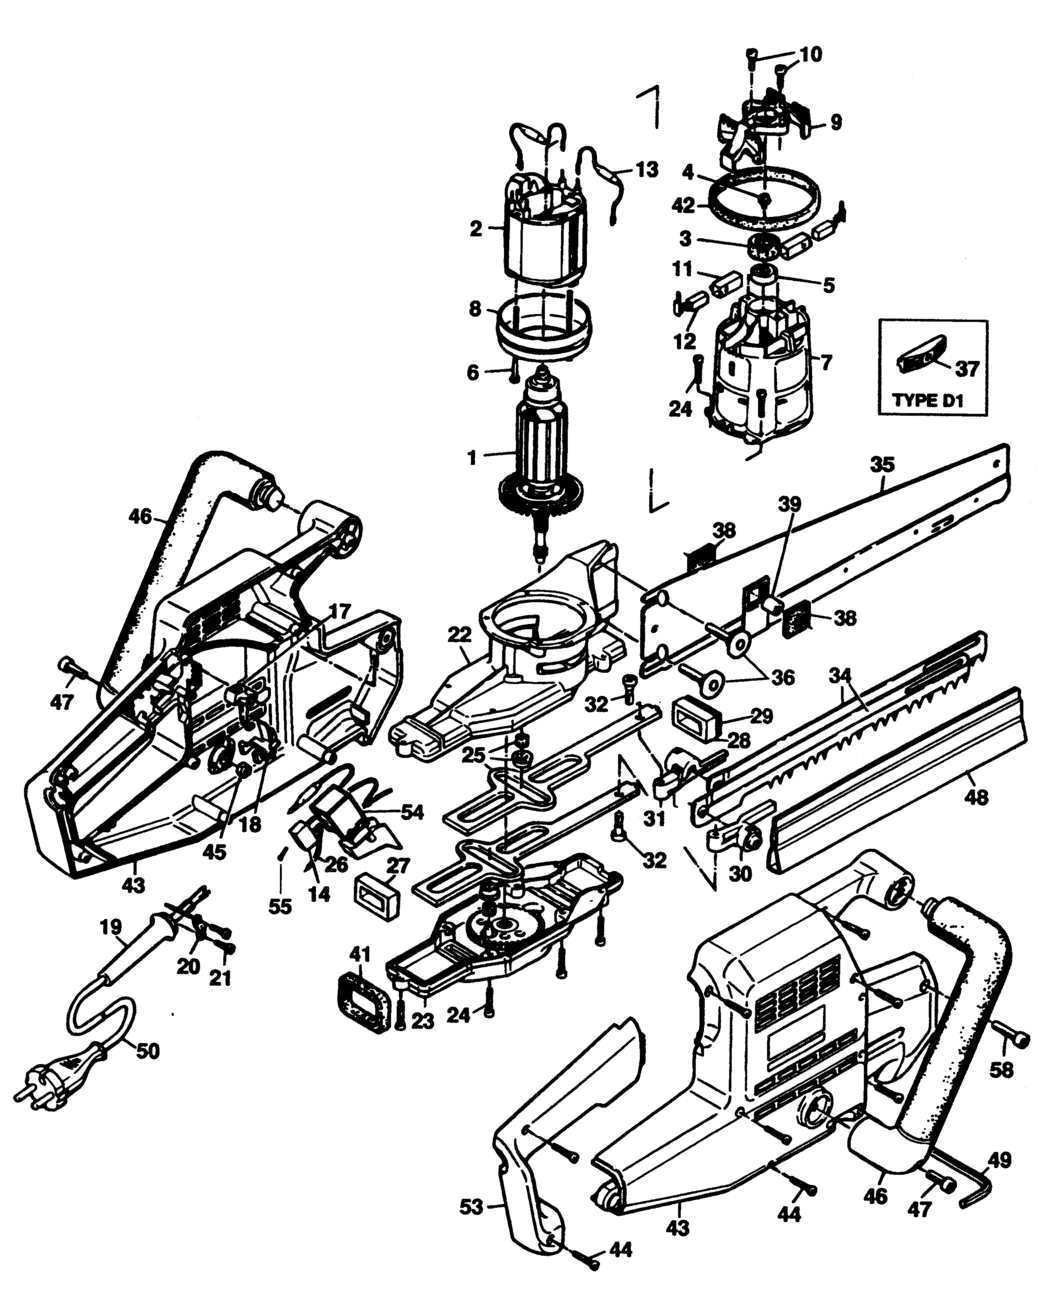 Black & Decker 3900 Type 1 Universal Saw Spare Parts